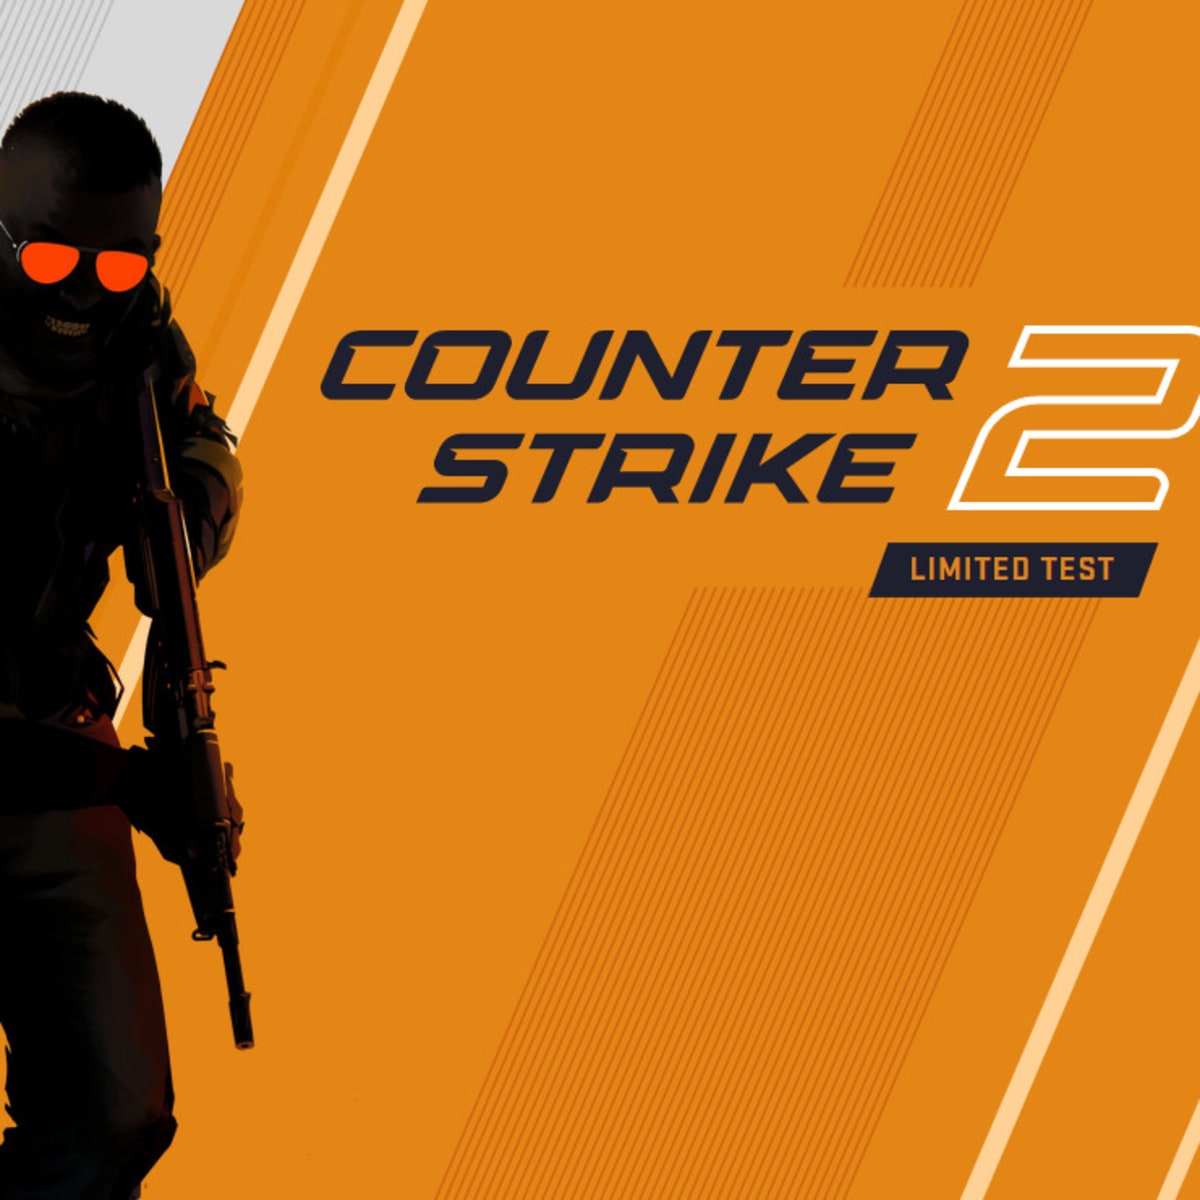 Counter-Strike 2 Release Date Confirmed for September 27, 2023